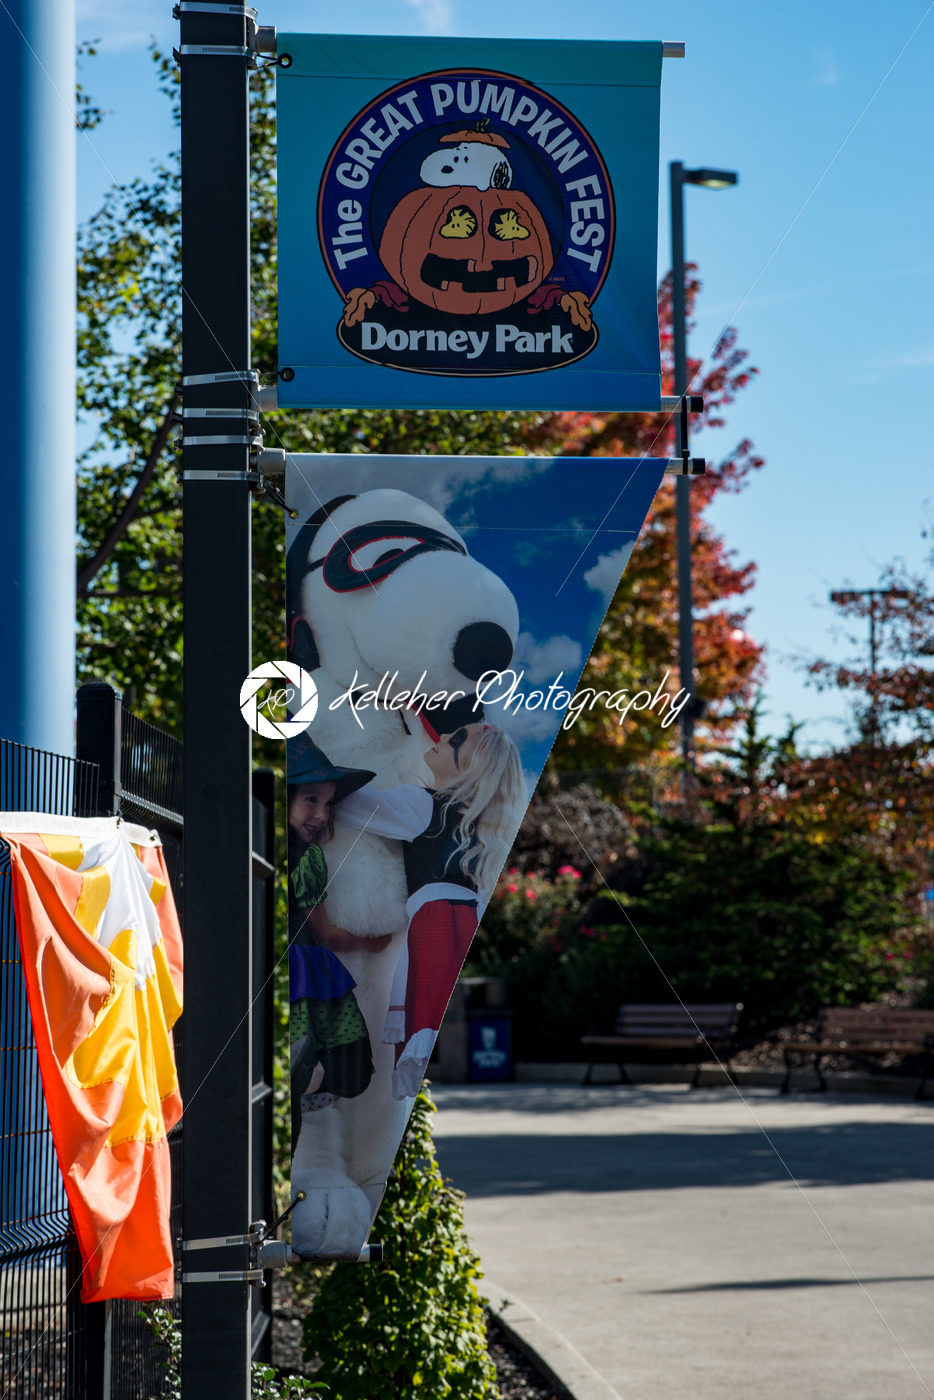 ALLENTOWN, PA – OCTOBER 22: Halloween Decorations at Dorney Park in Allentown, Pennsylvania - Kelleher Photography Store